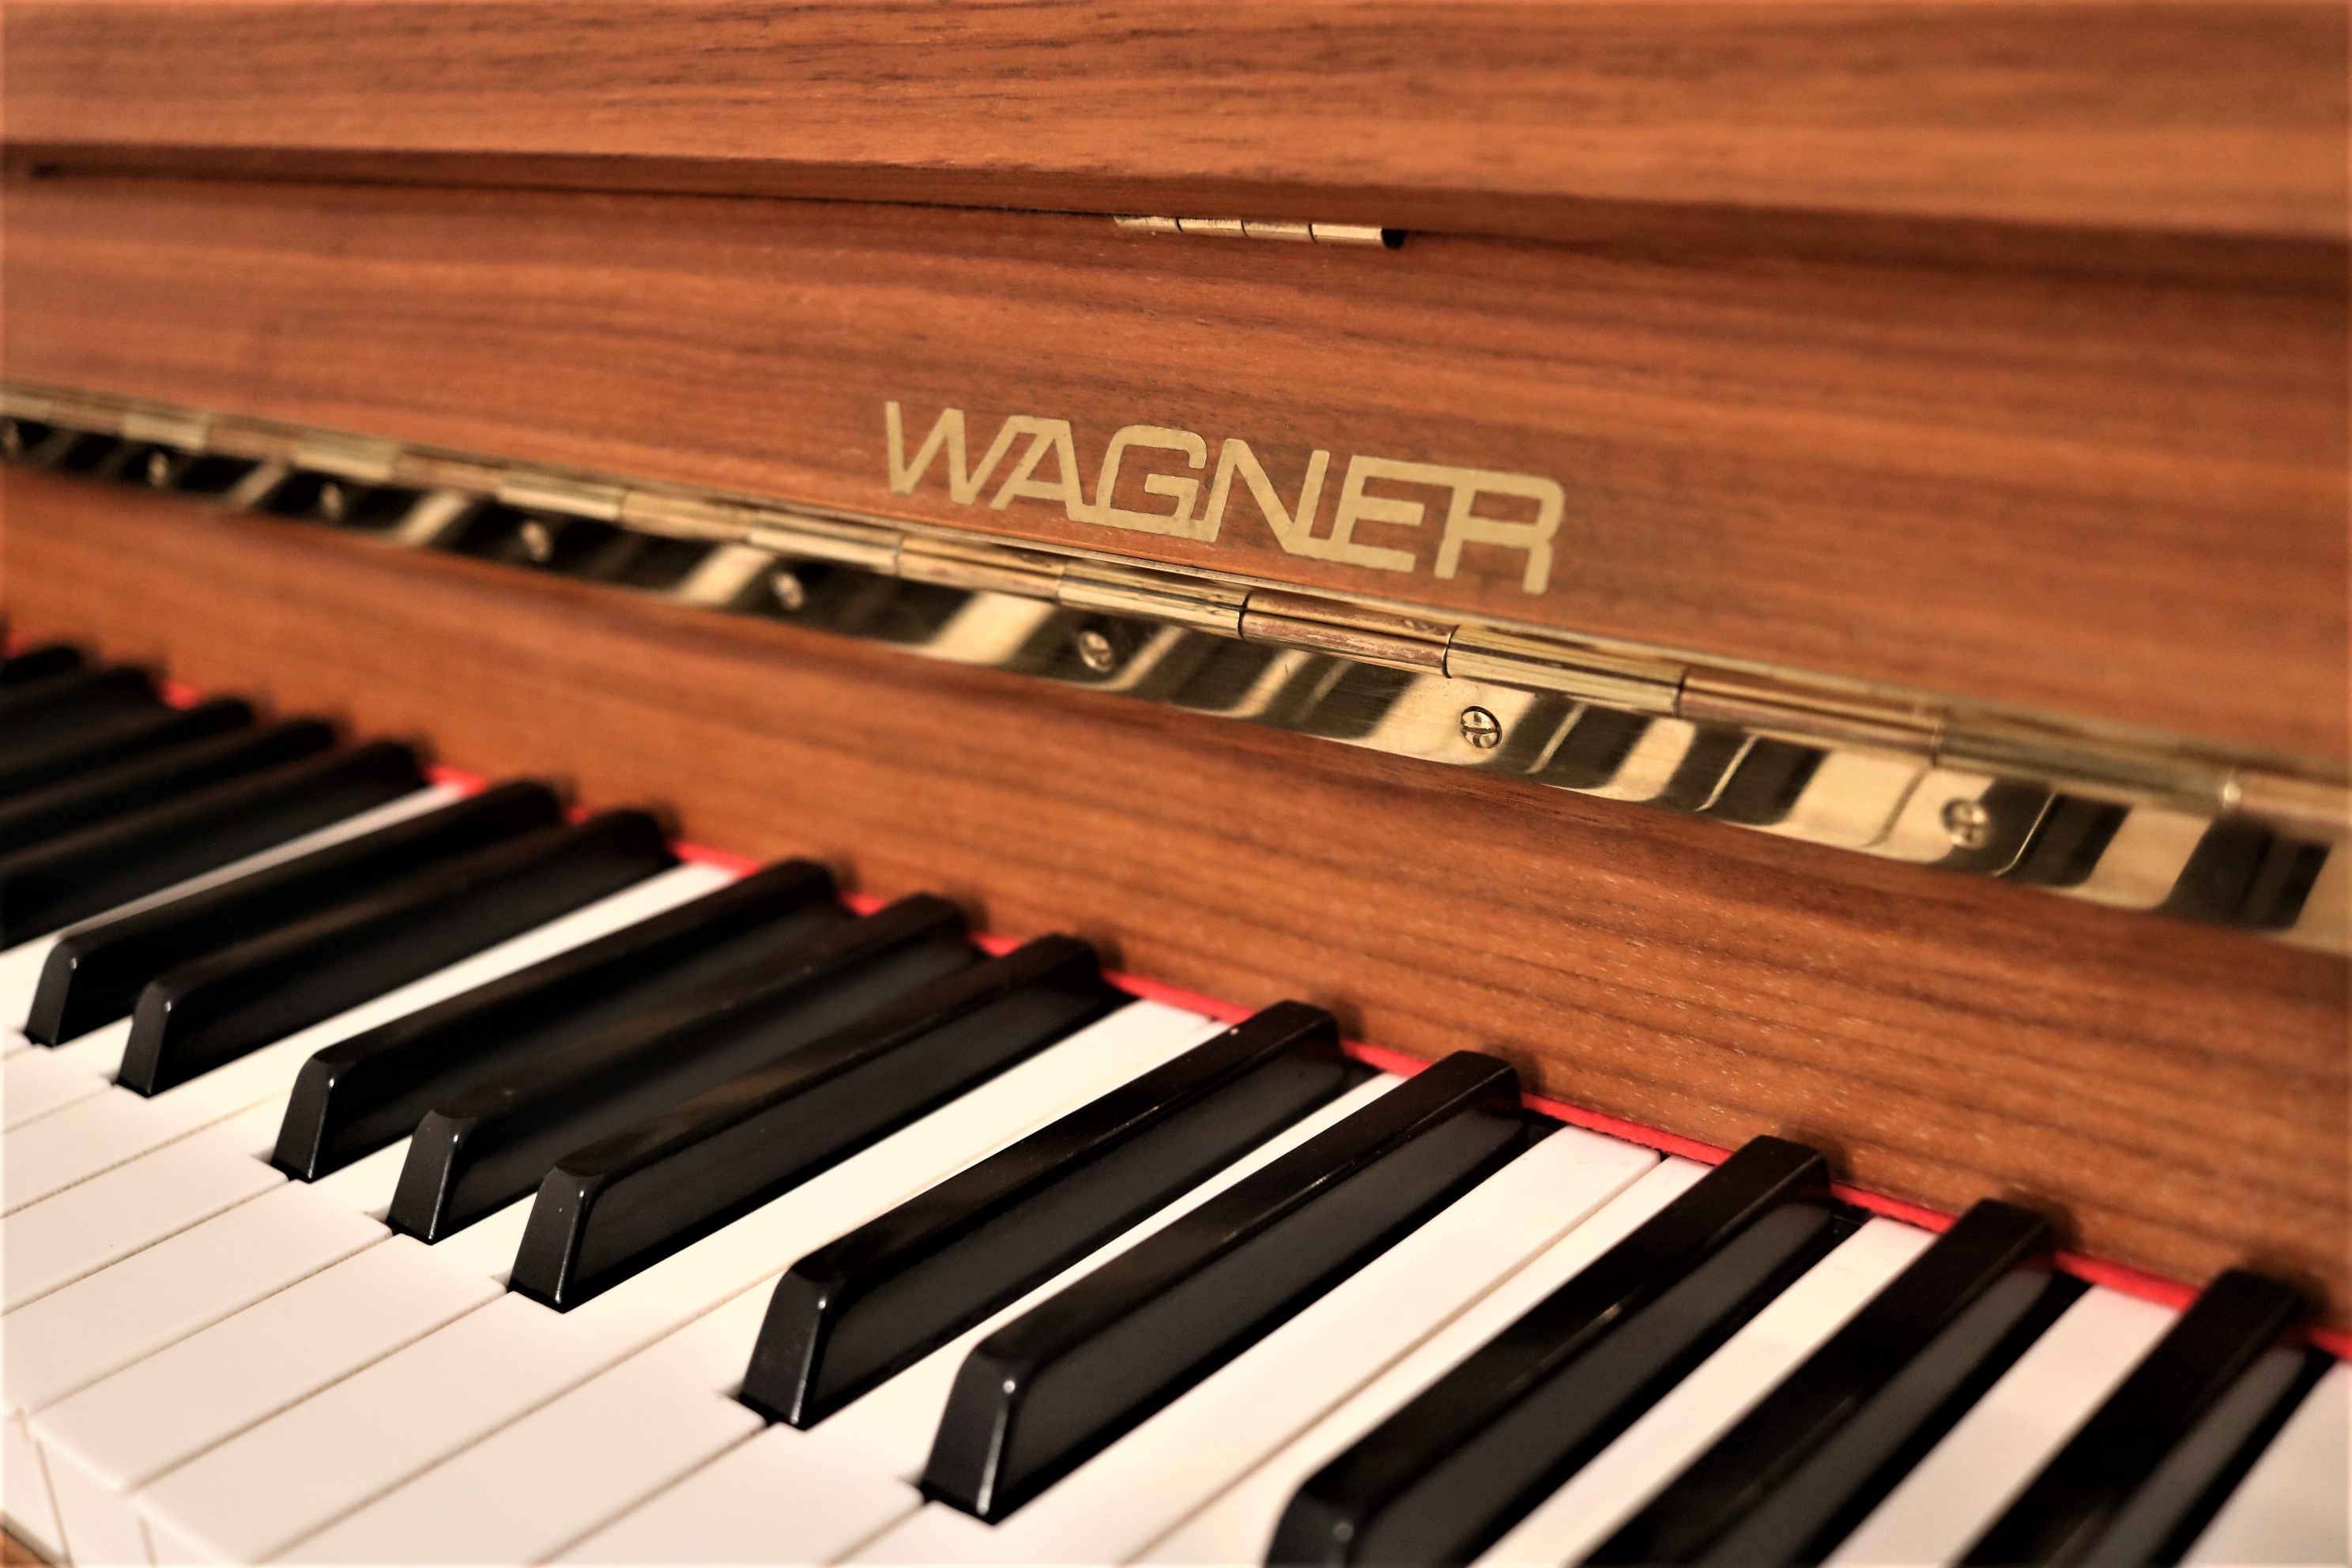 Wagner Klavier